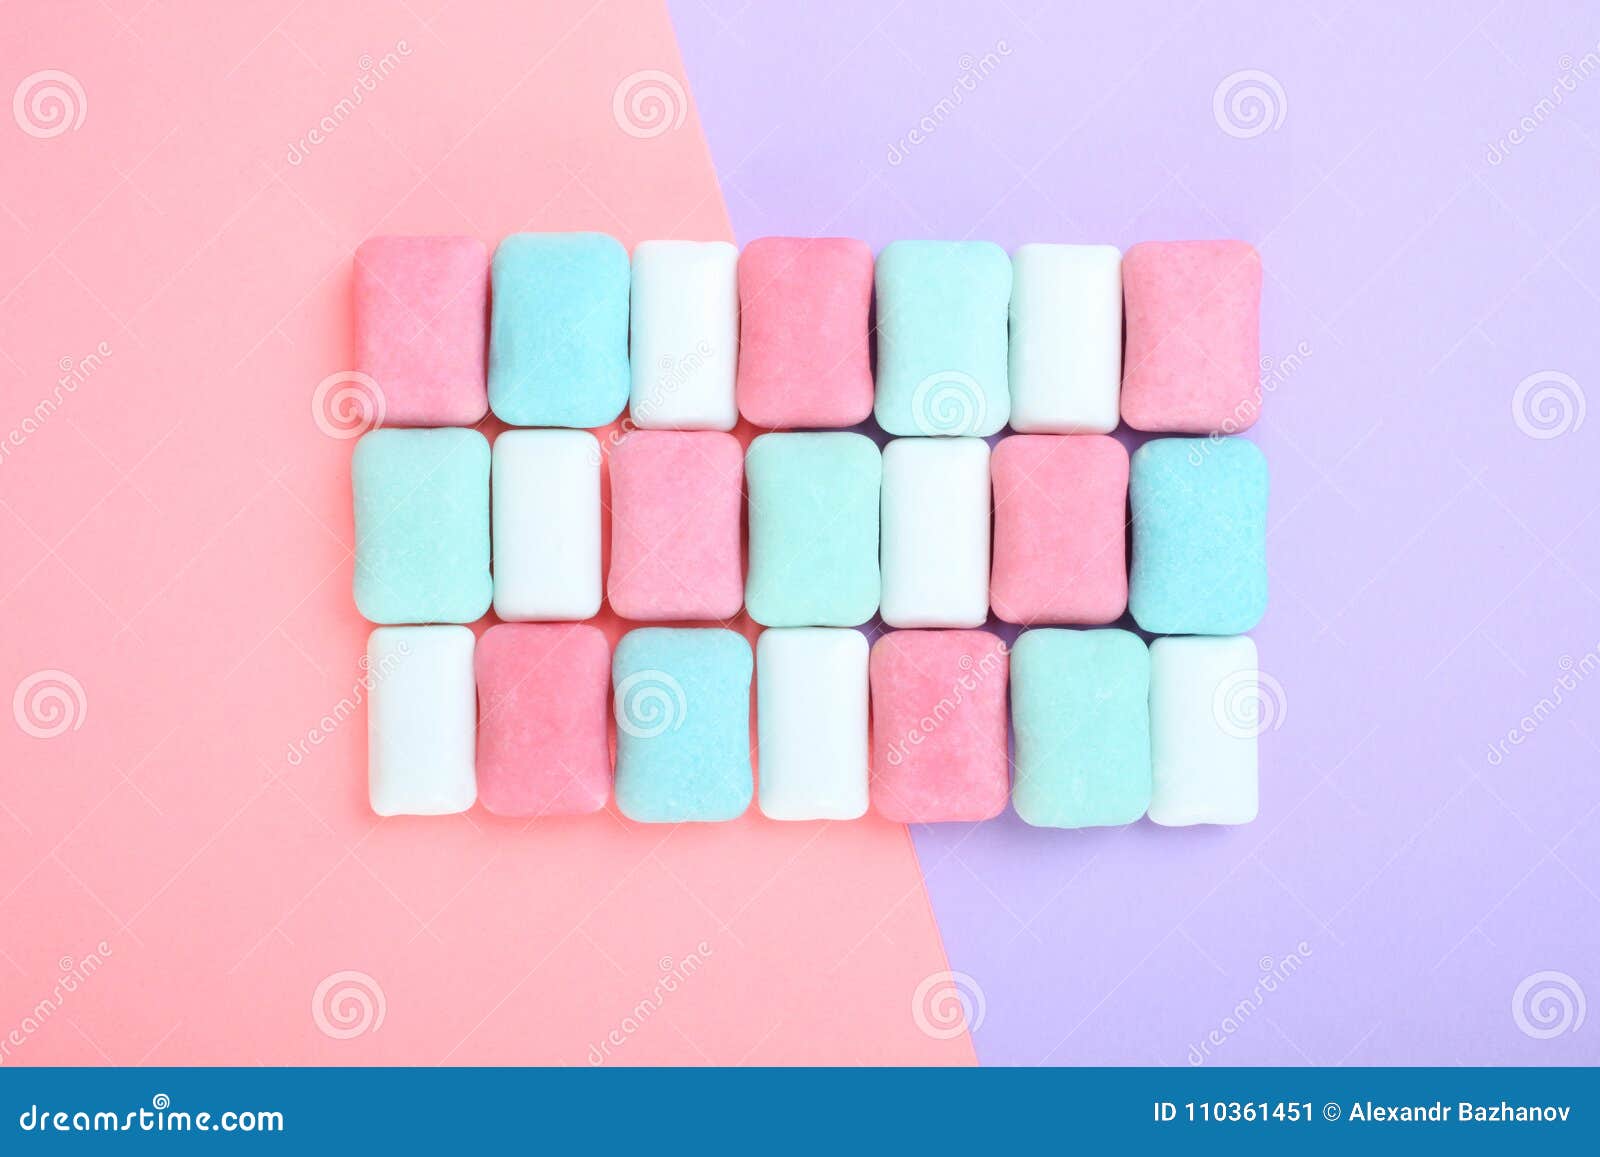 Bubble Gum Pastel Colors Stock Image Image Of Dental 110361451